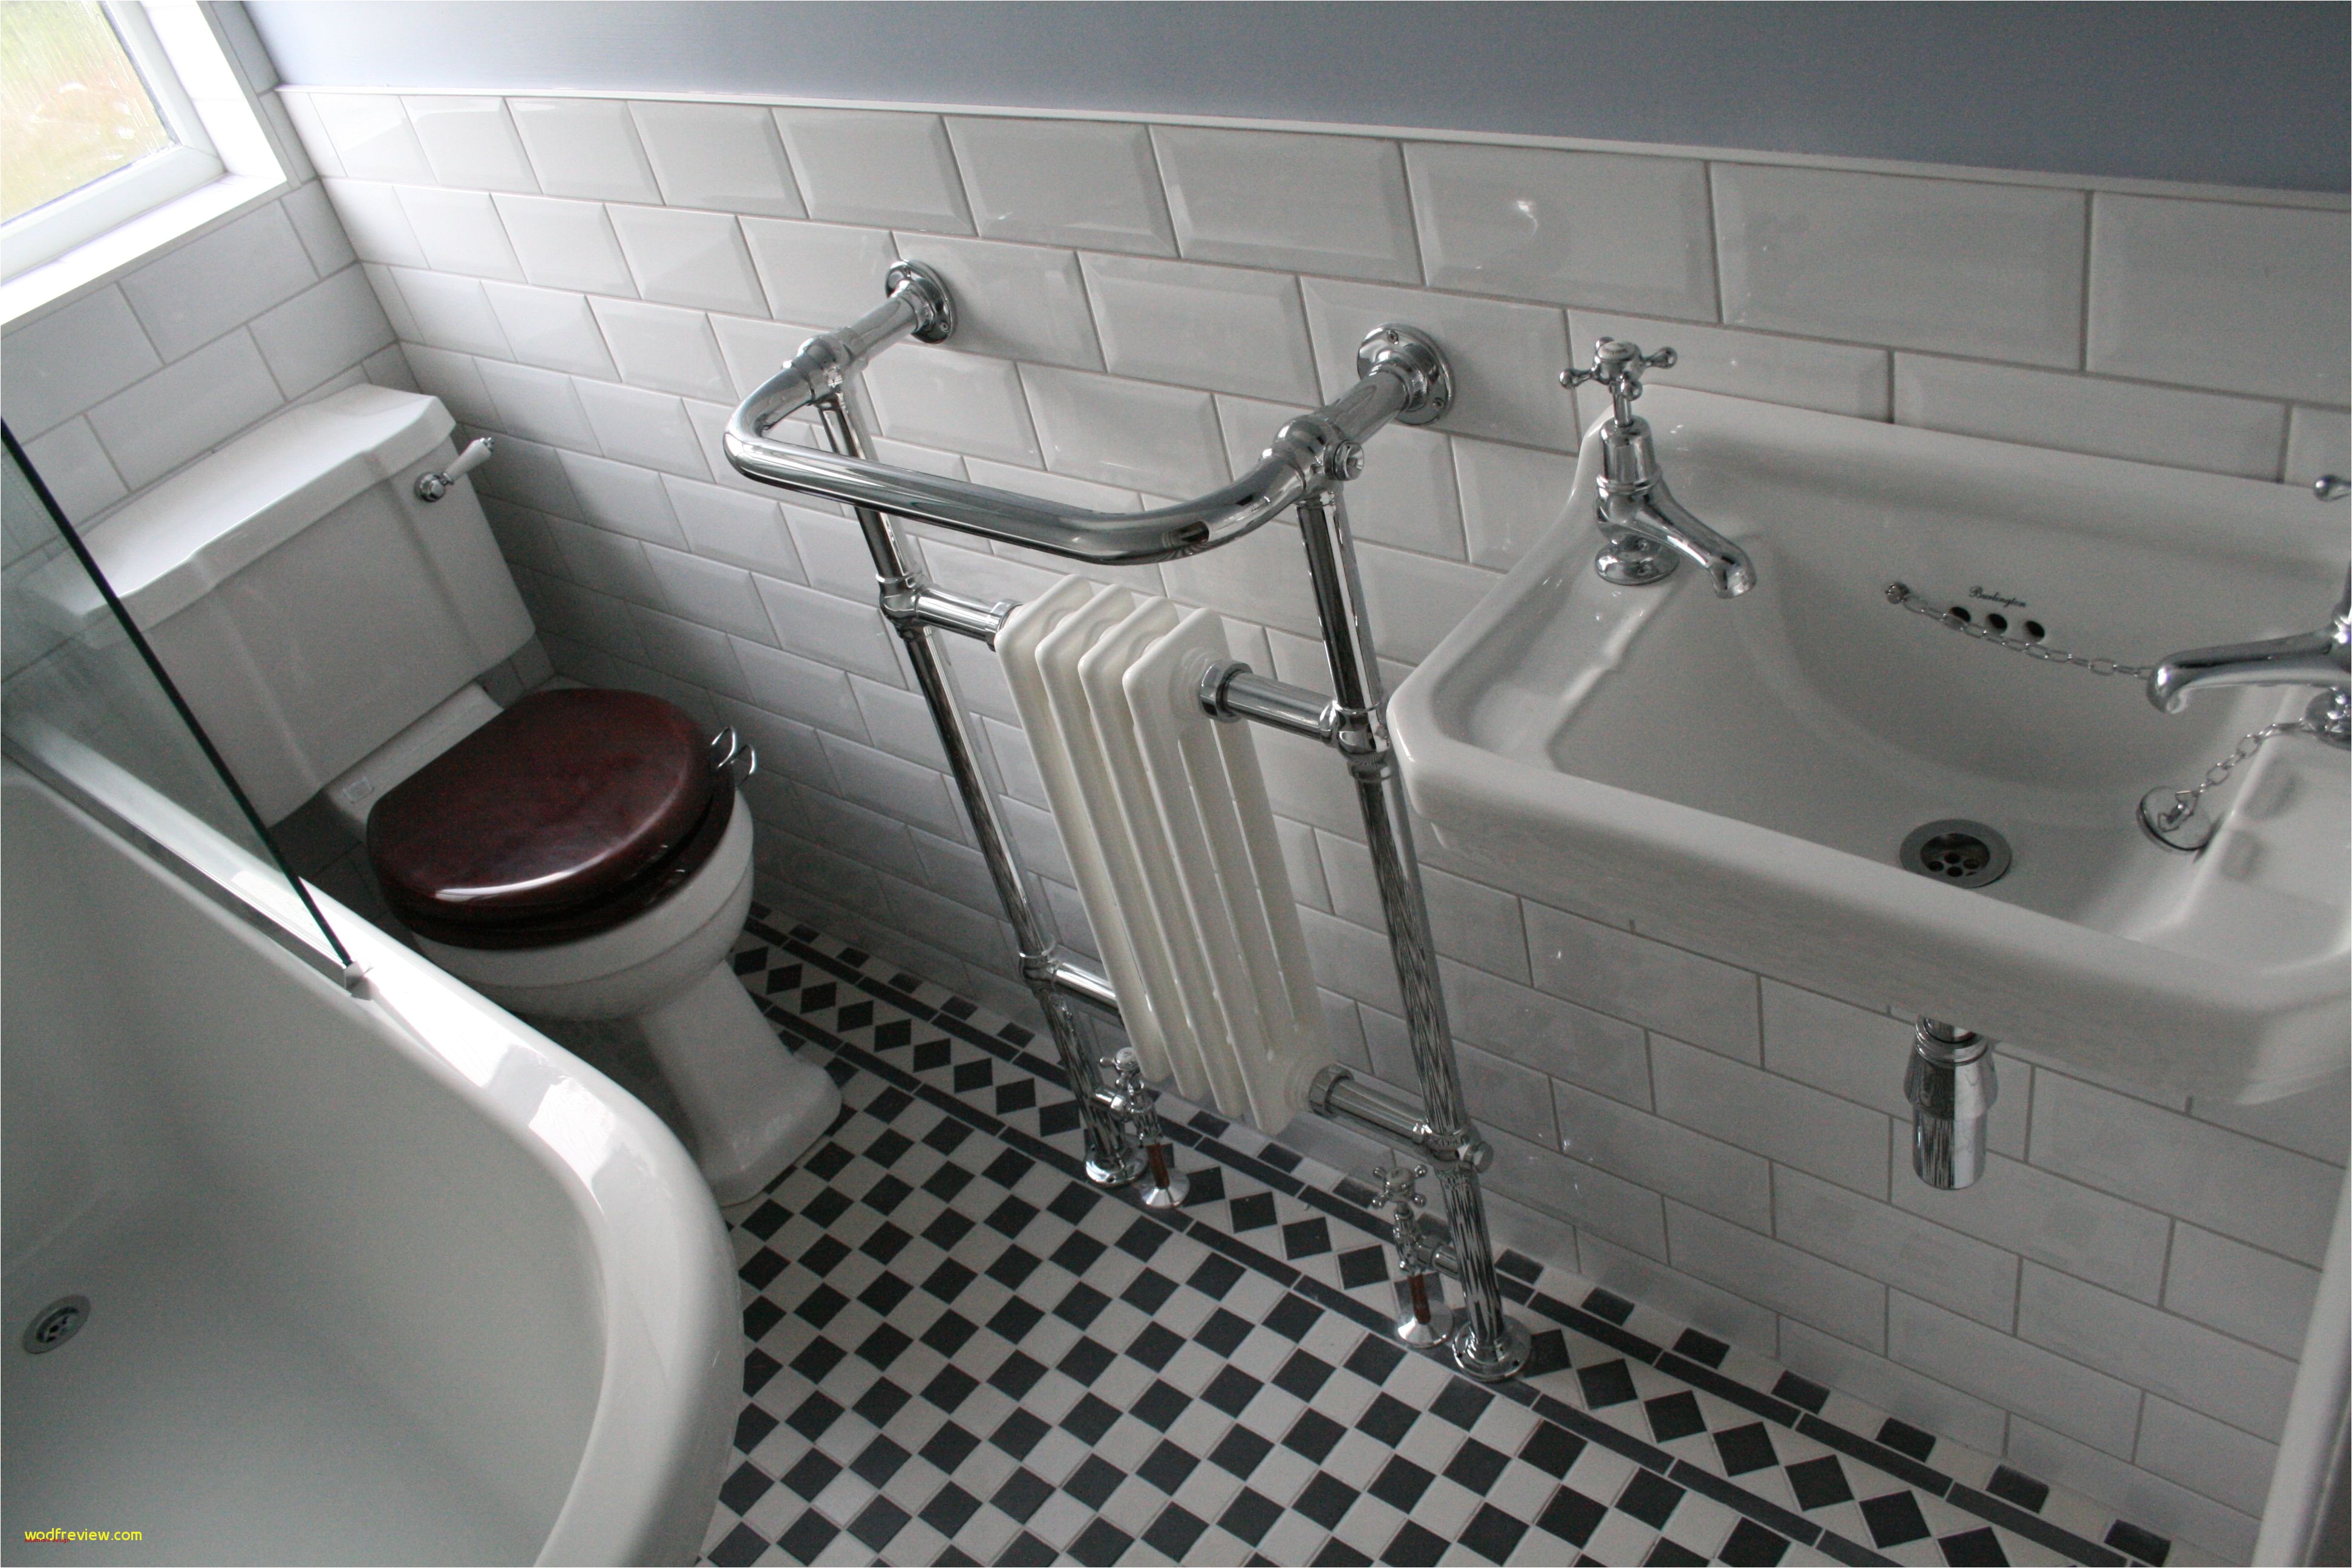 new bathrooms designs small bathroom design ideas luxury bathroom designer 0d tag